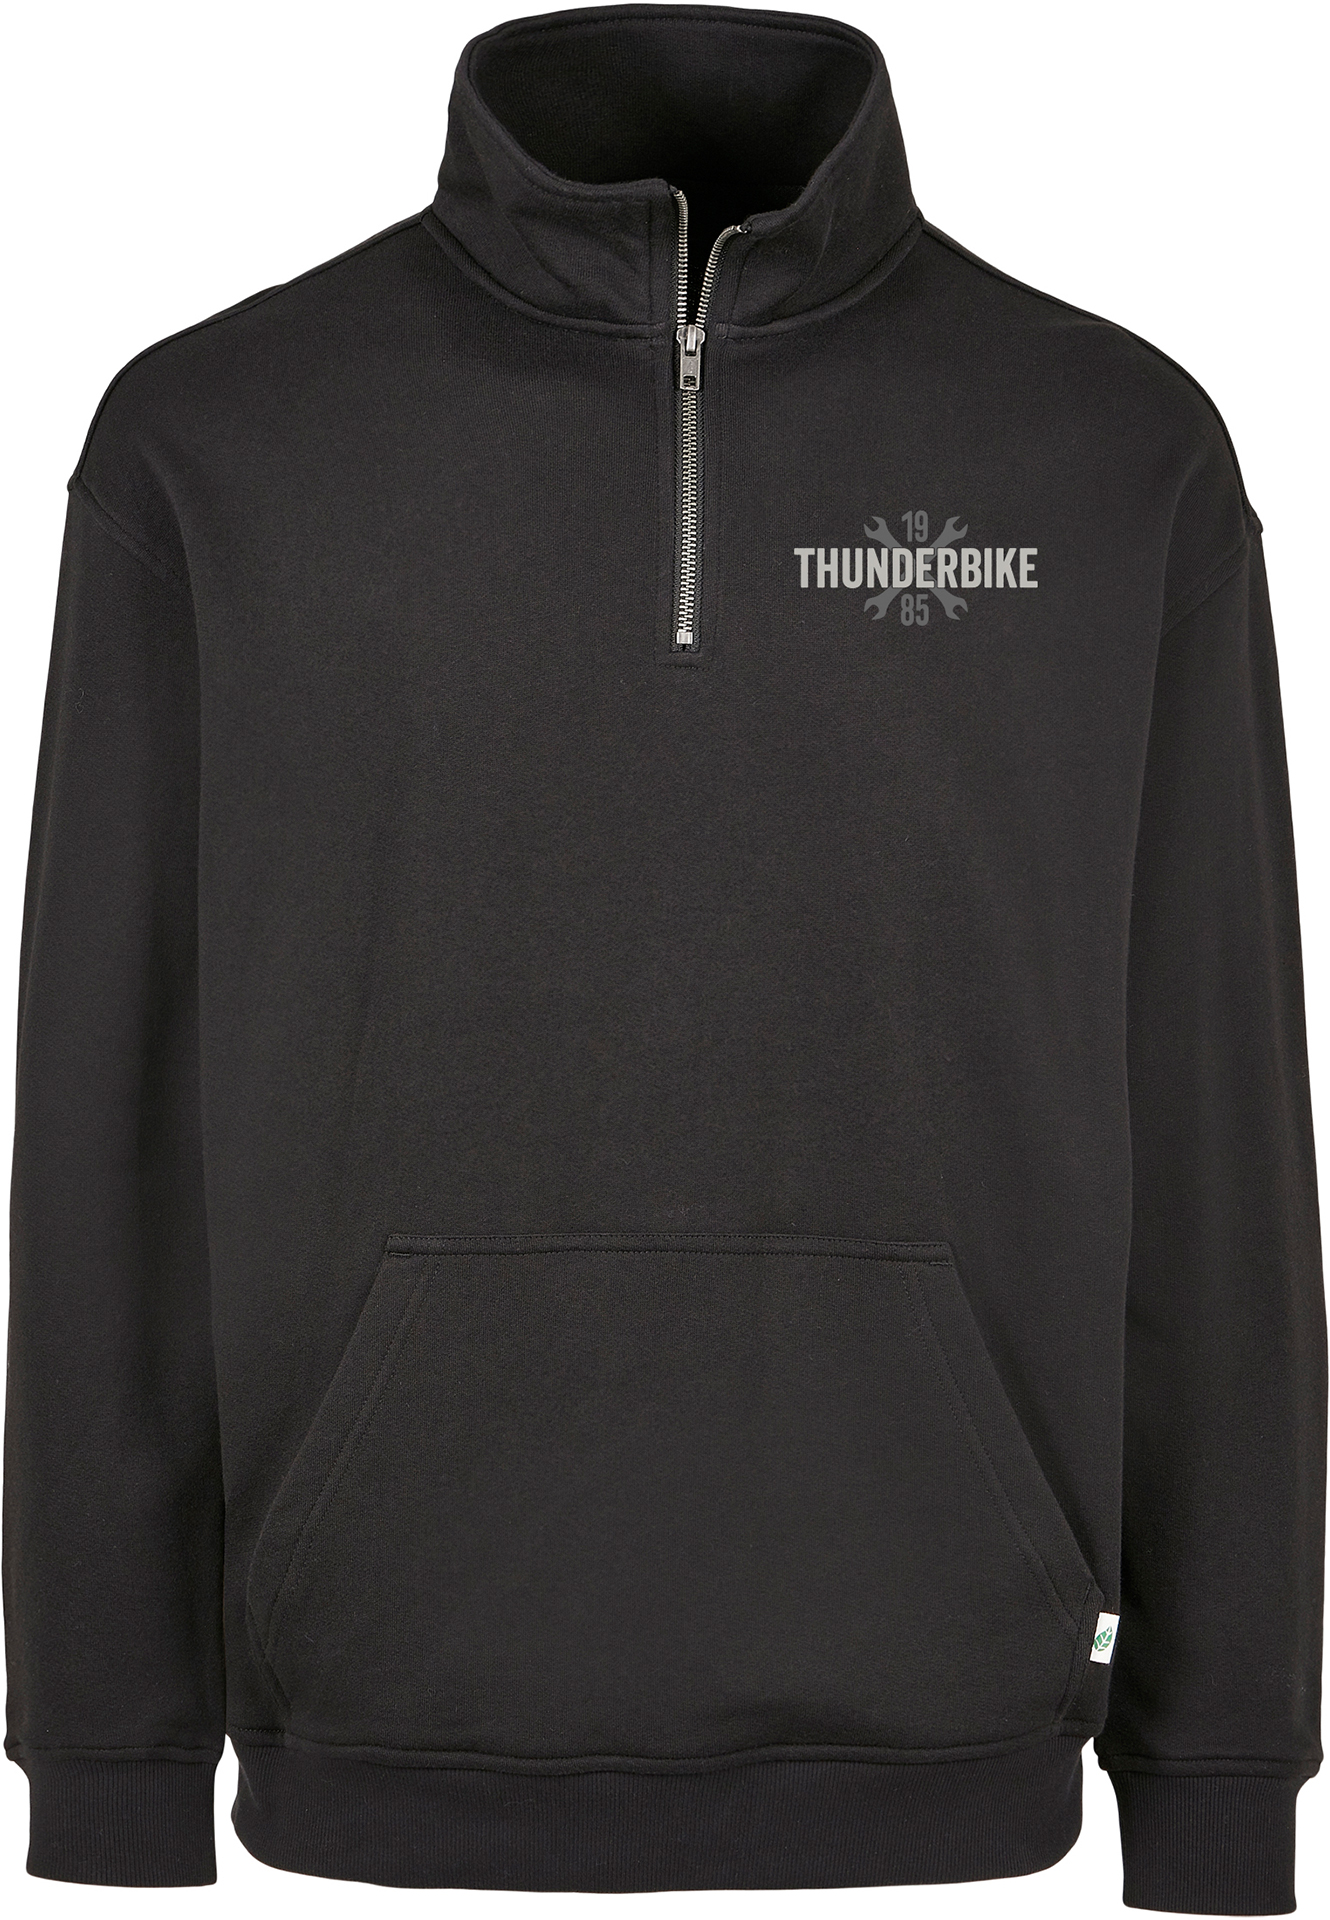 Thunderbike Troyer 1/4 Zip Sweater schwarz im Thunderbike Shop